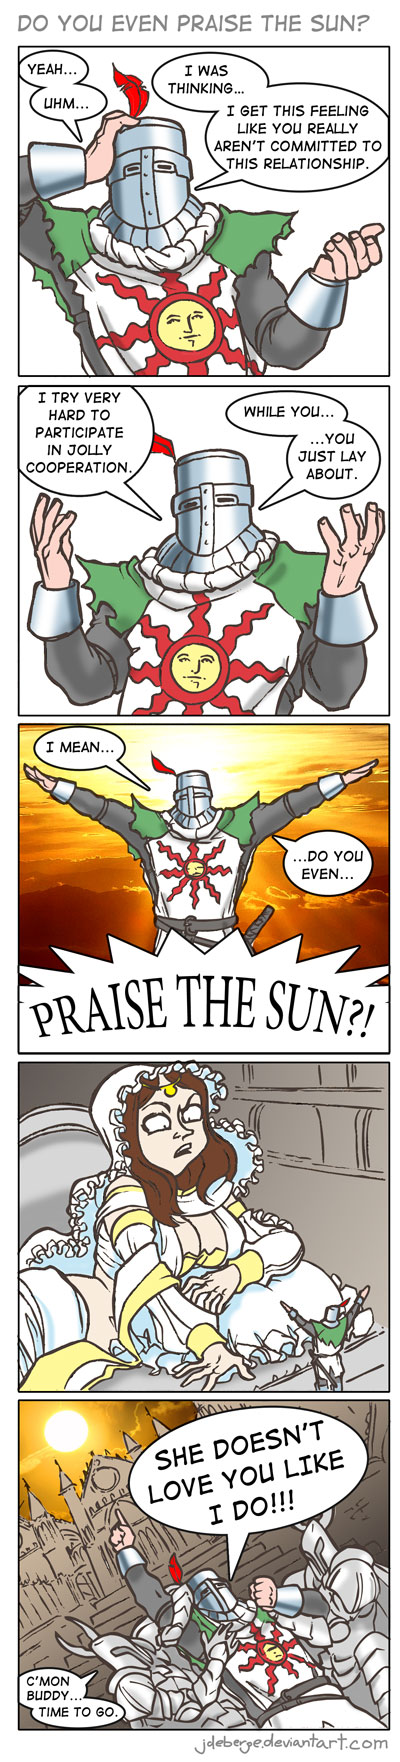 do_you_even_praise_the_sun__by_jdeberge-d77e23y.jpg